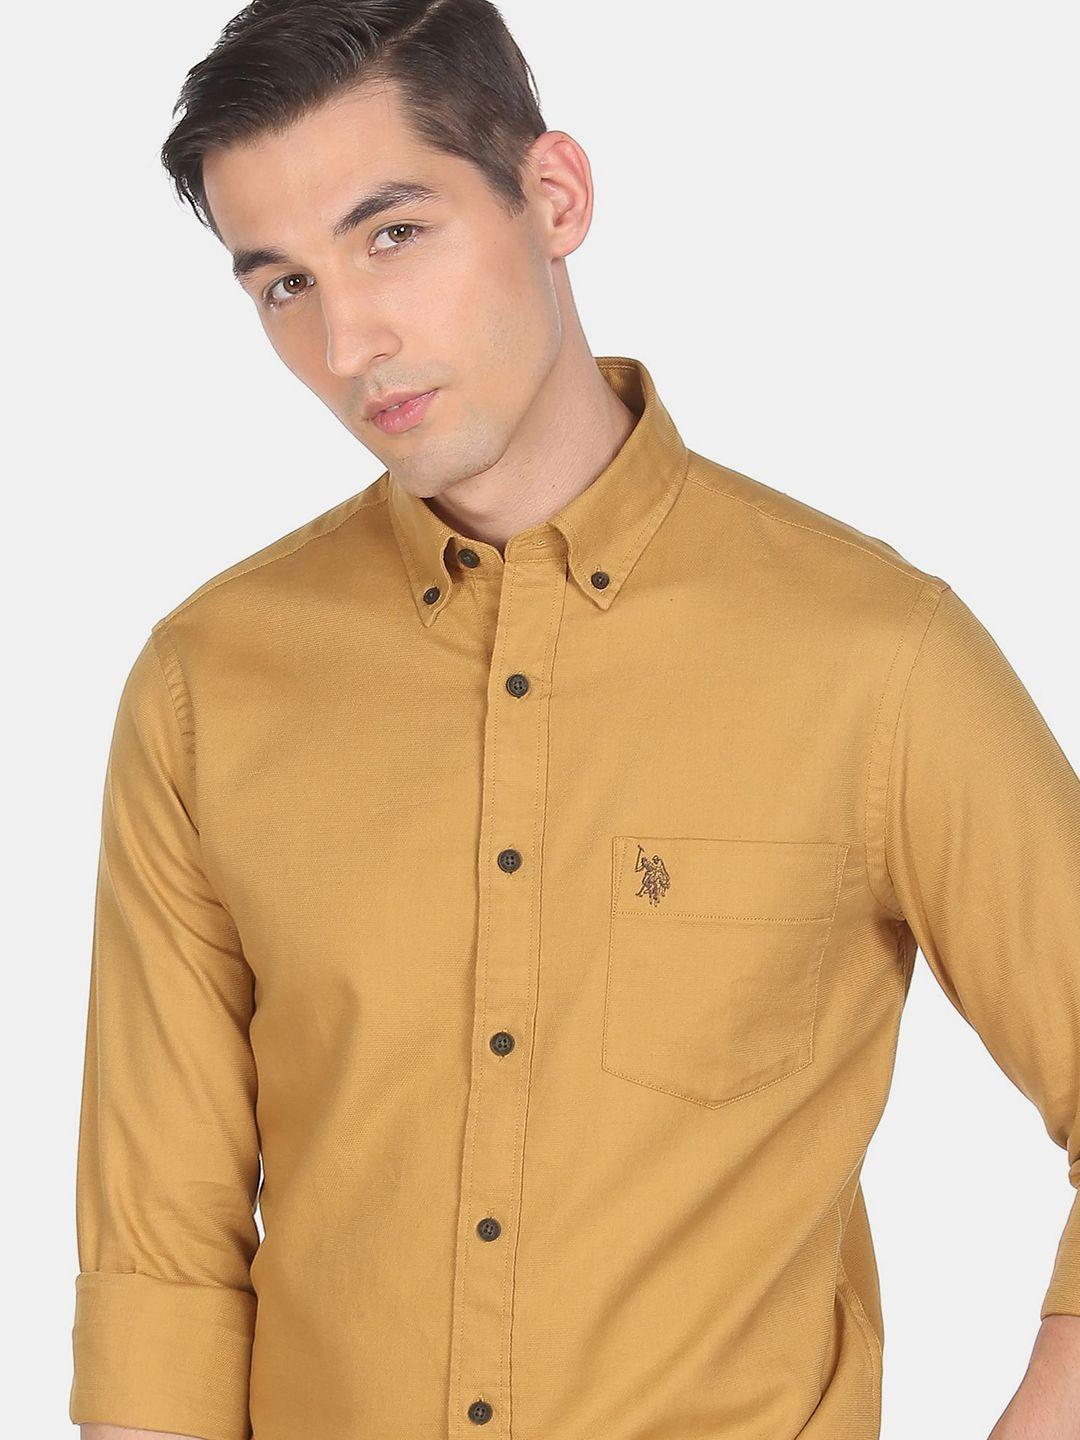 u s polo assn men yellow cotton solid casual shirt